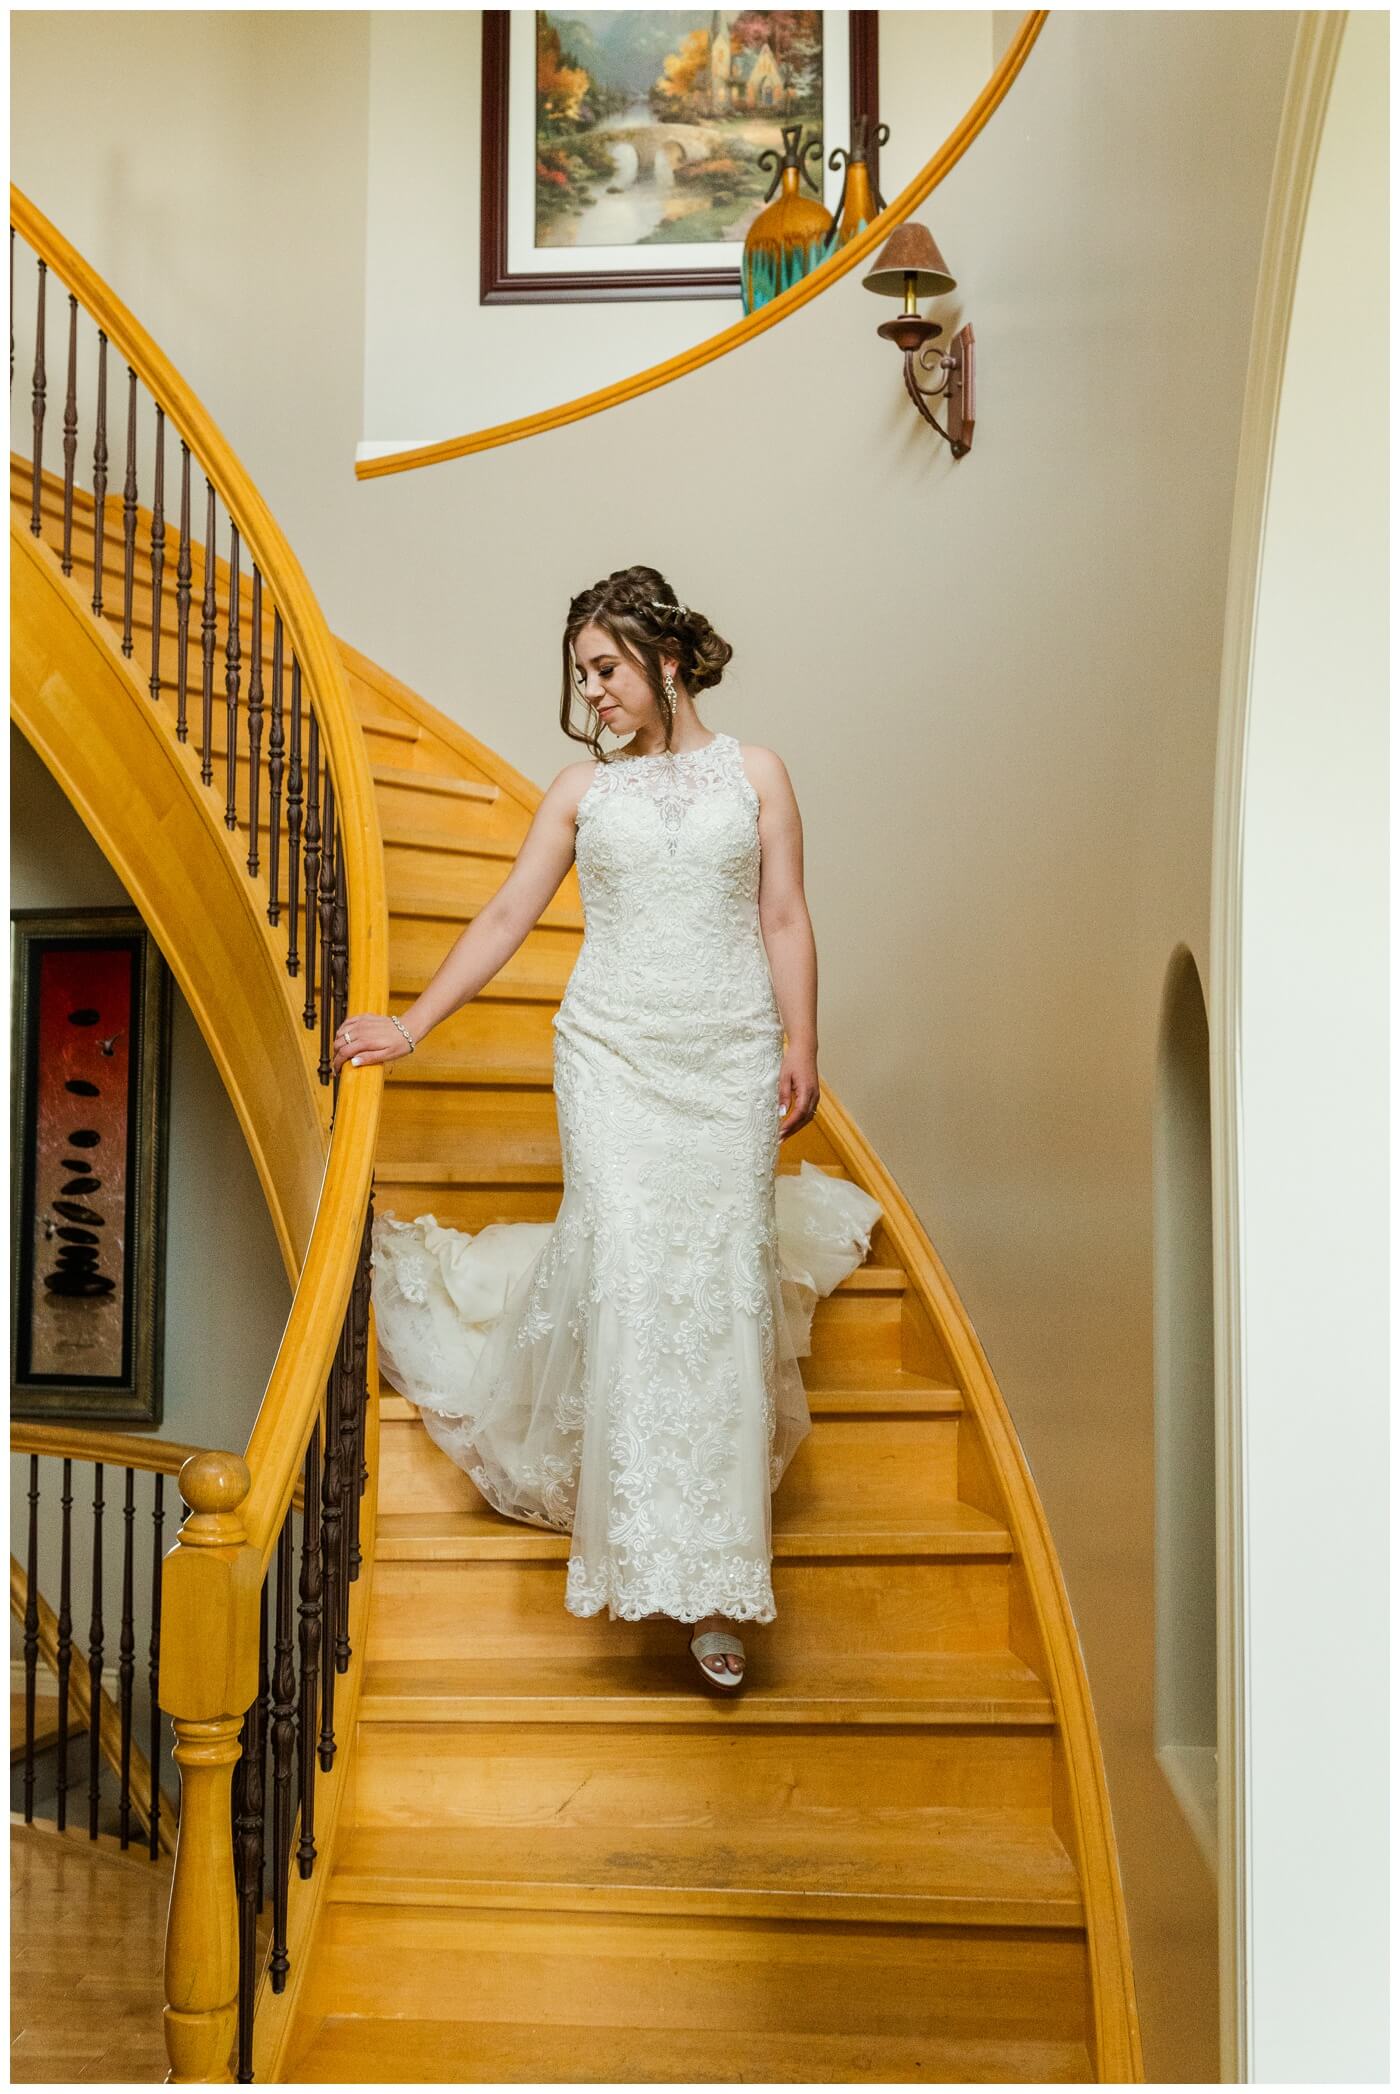 Dominik & Chelsea - Moose Jaw Wedding - 10 - Bride descending staircase in W Bridals dress